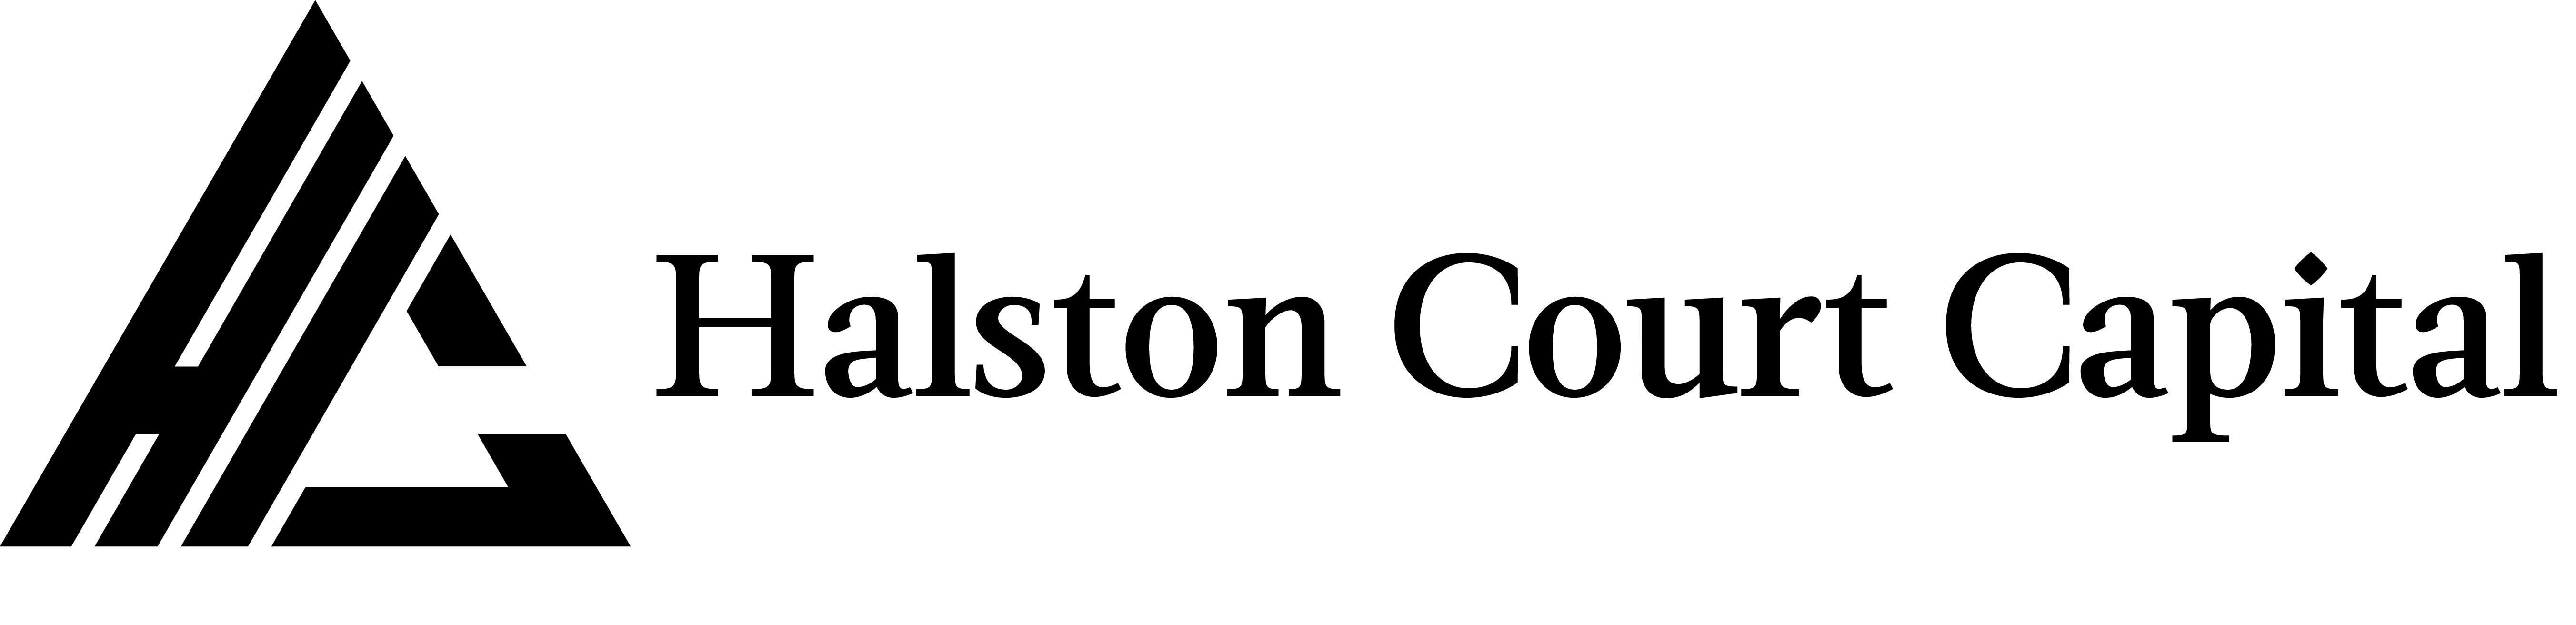 Halston Logo - Services - Halston Court Capital